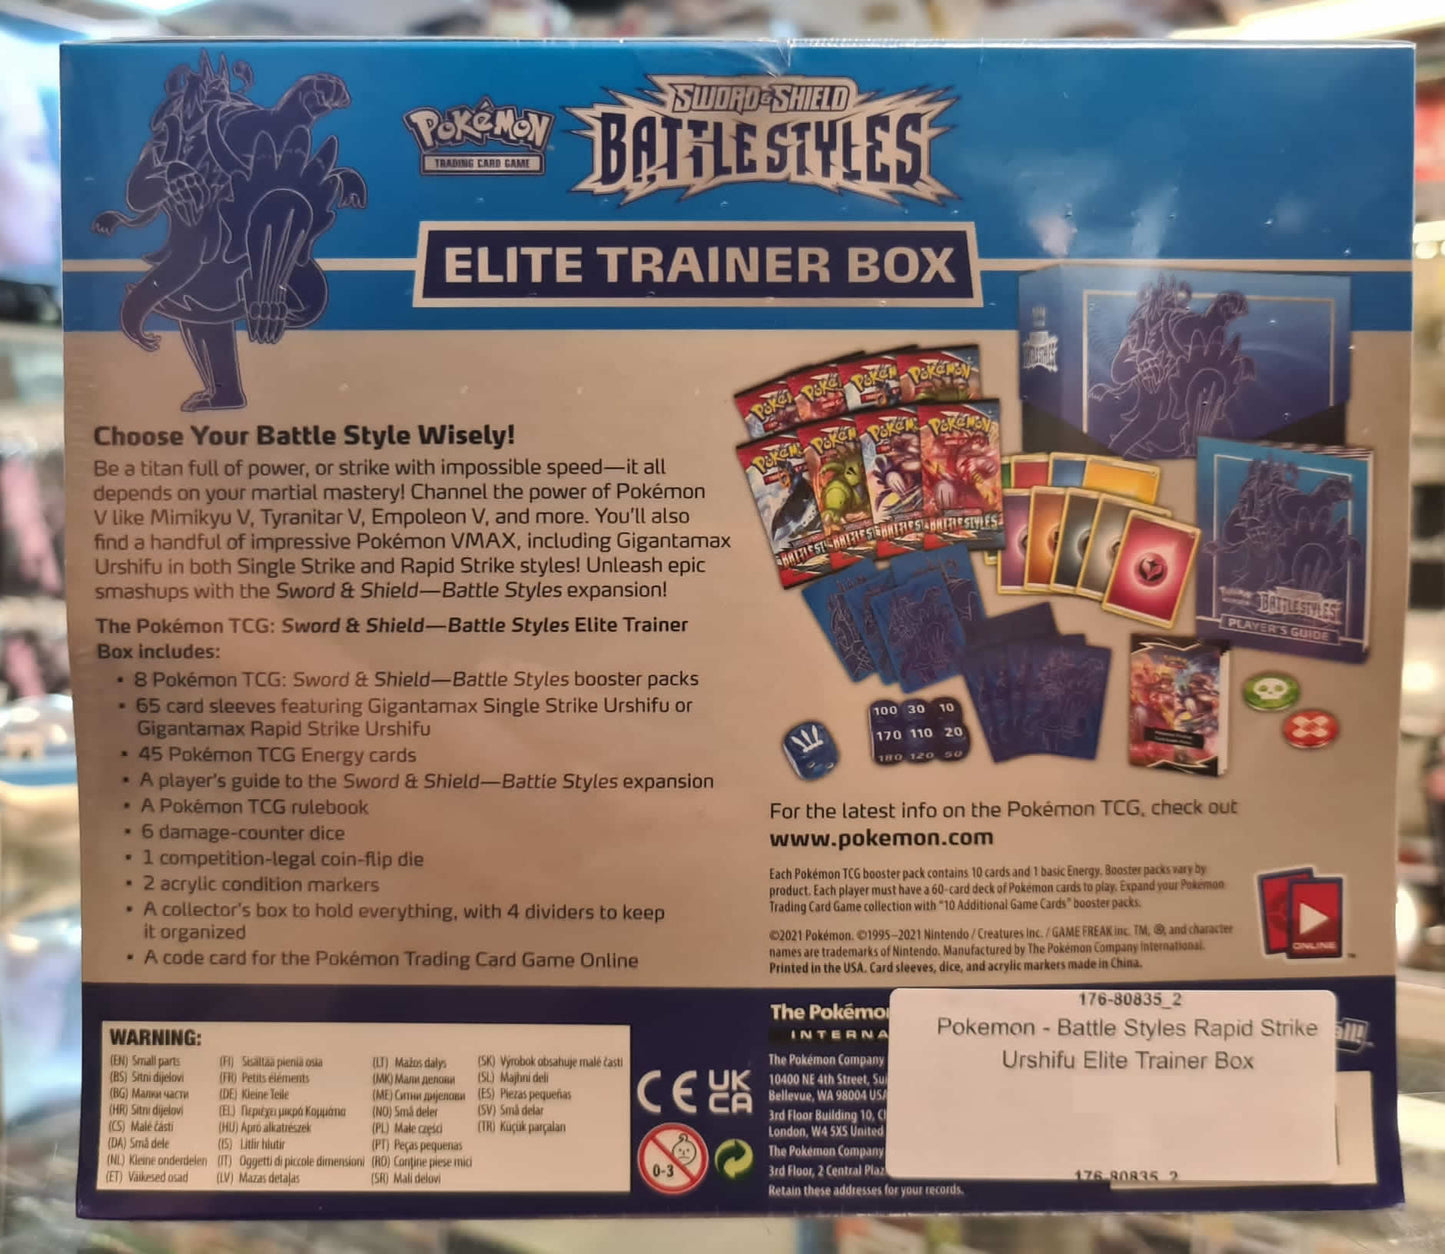 Pokemon TCG: Battle Styles Rapid Strike Urshifu Elite Trainer Box